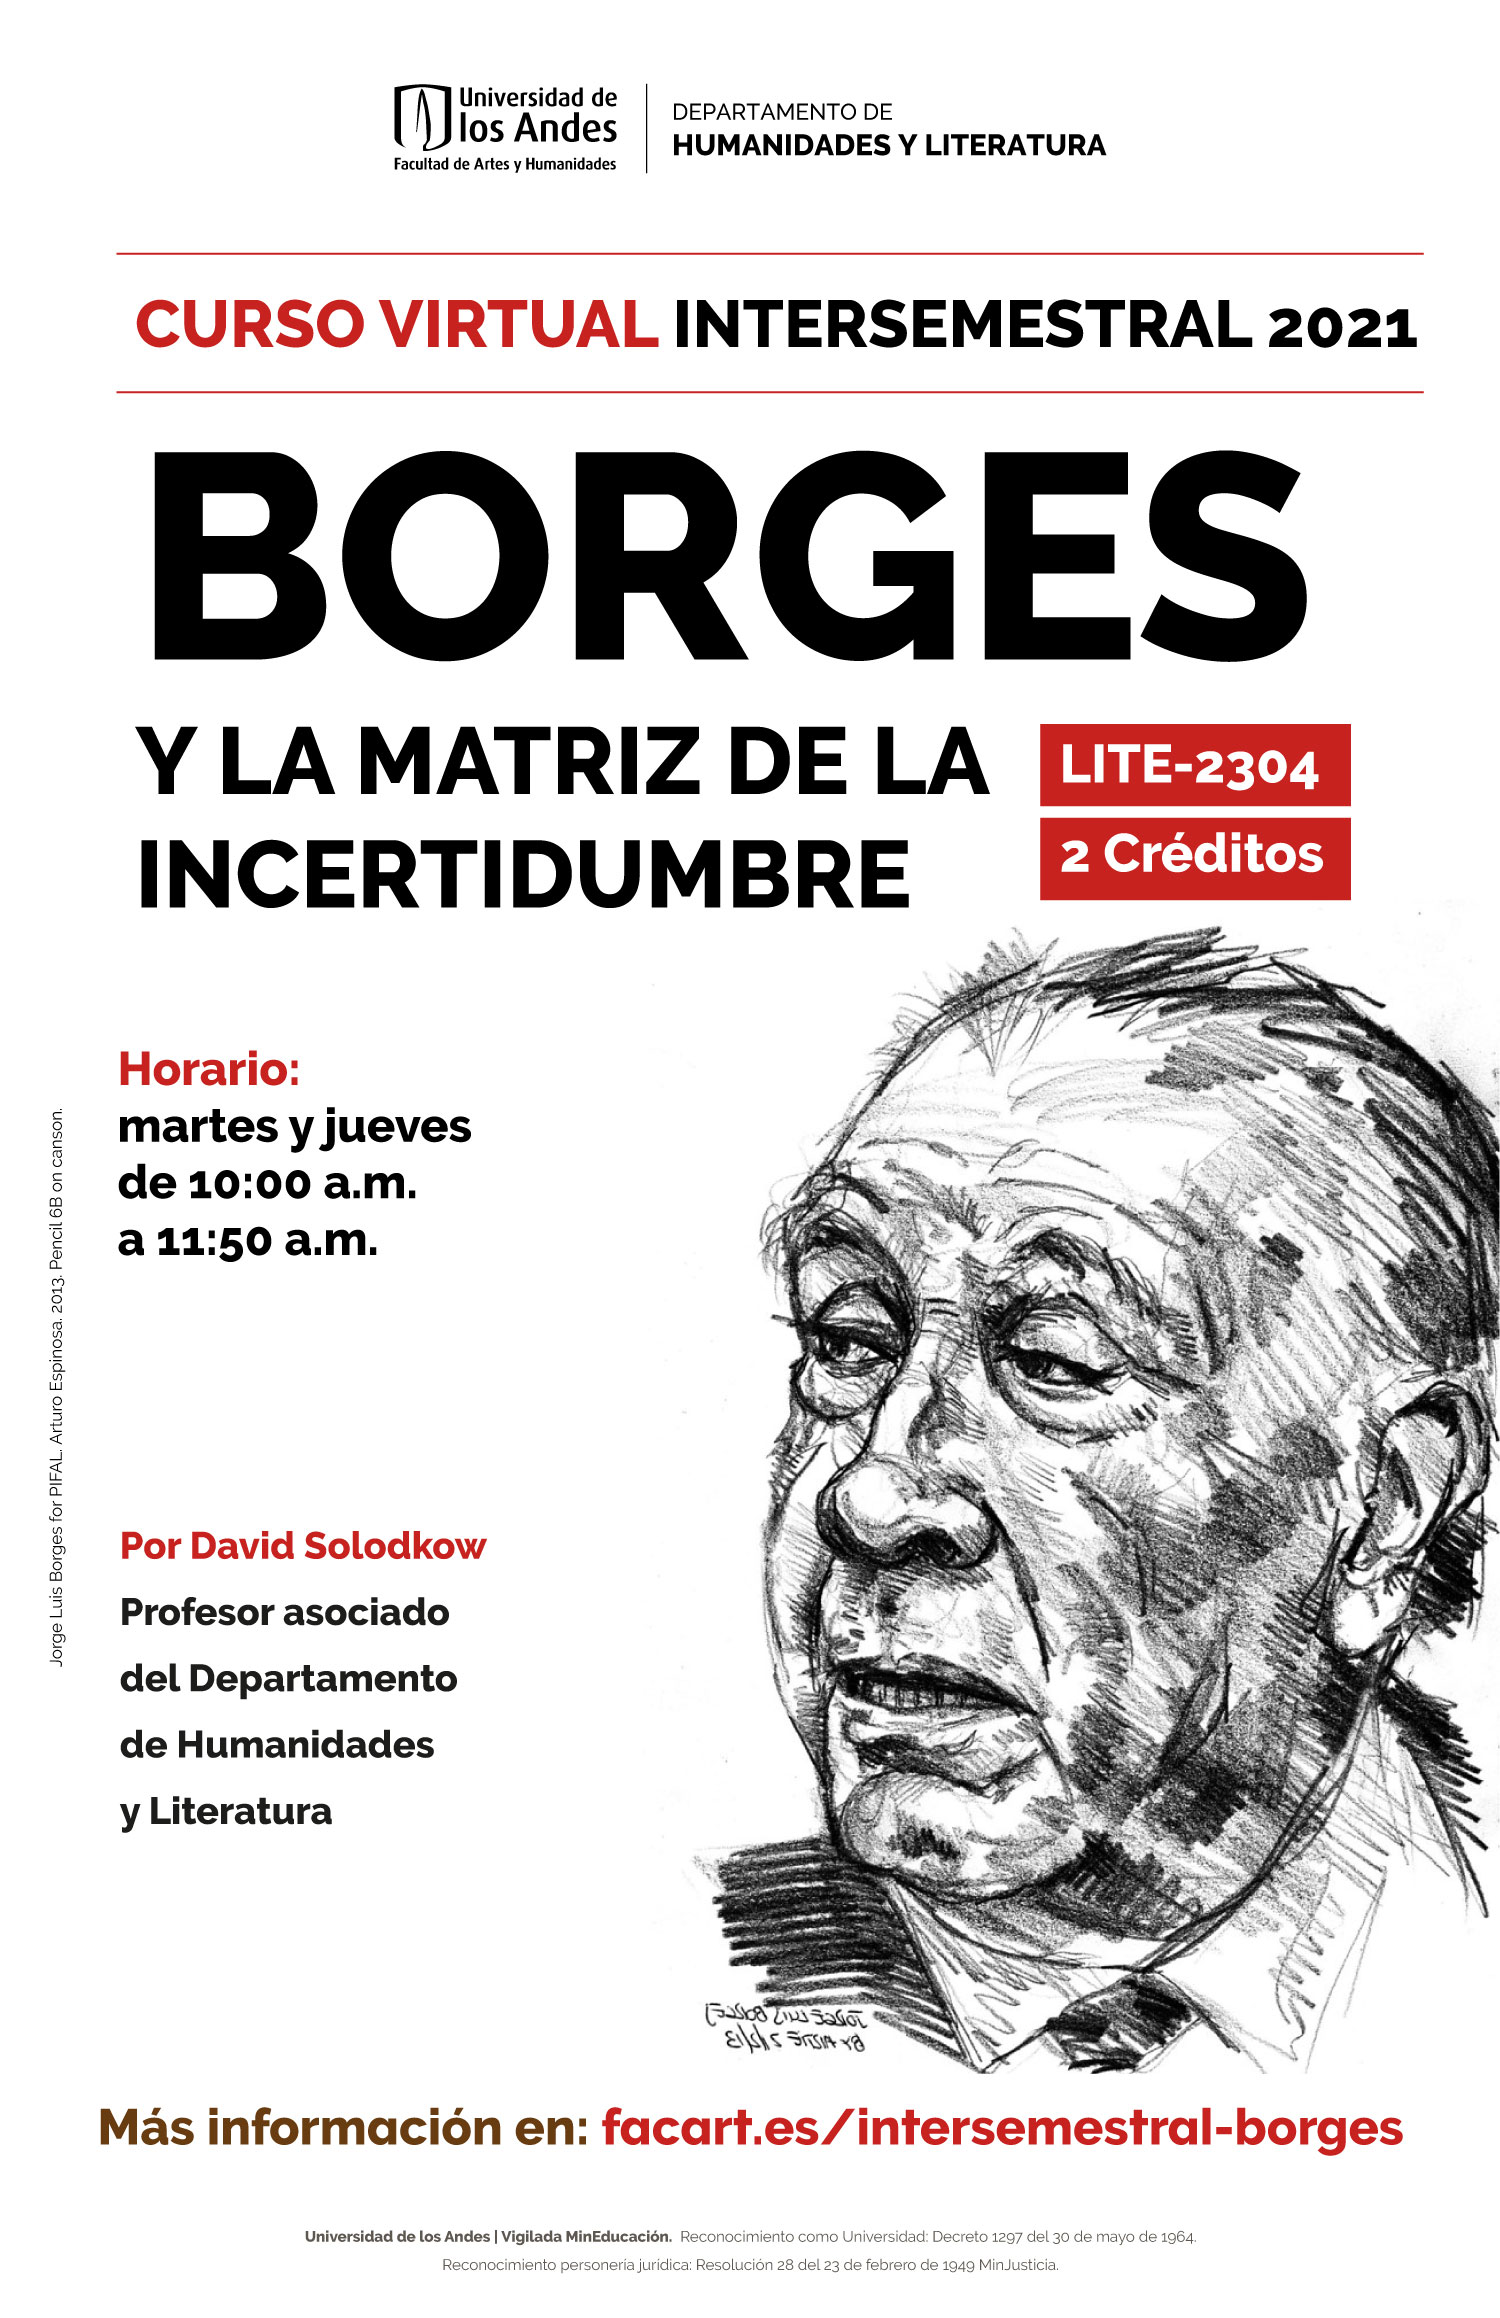 LITE-2304 JORGE LUIS BORGES Y LA MATRIZ DE LA INCERTIDUMBRE